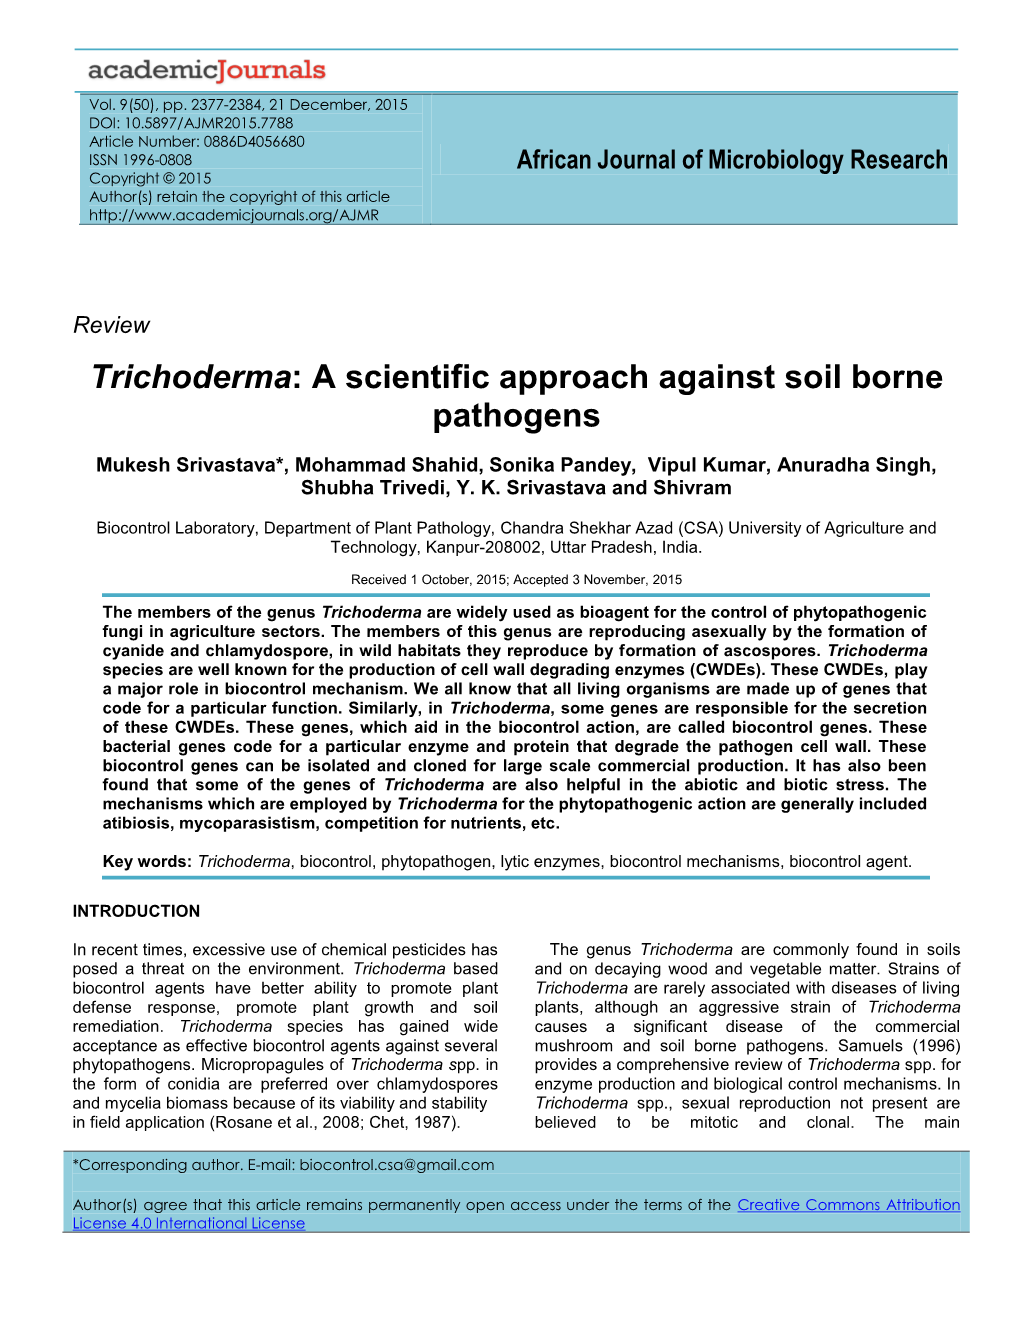 Trichoderma: a Scientific Approach Against Soil Borne Pathogens